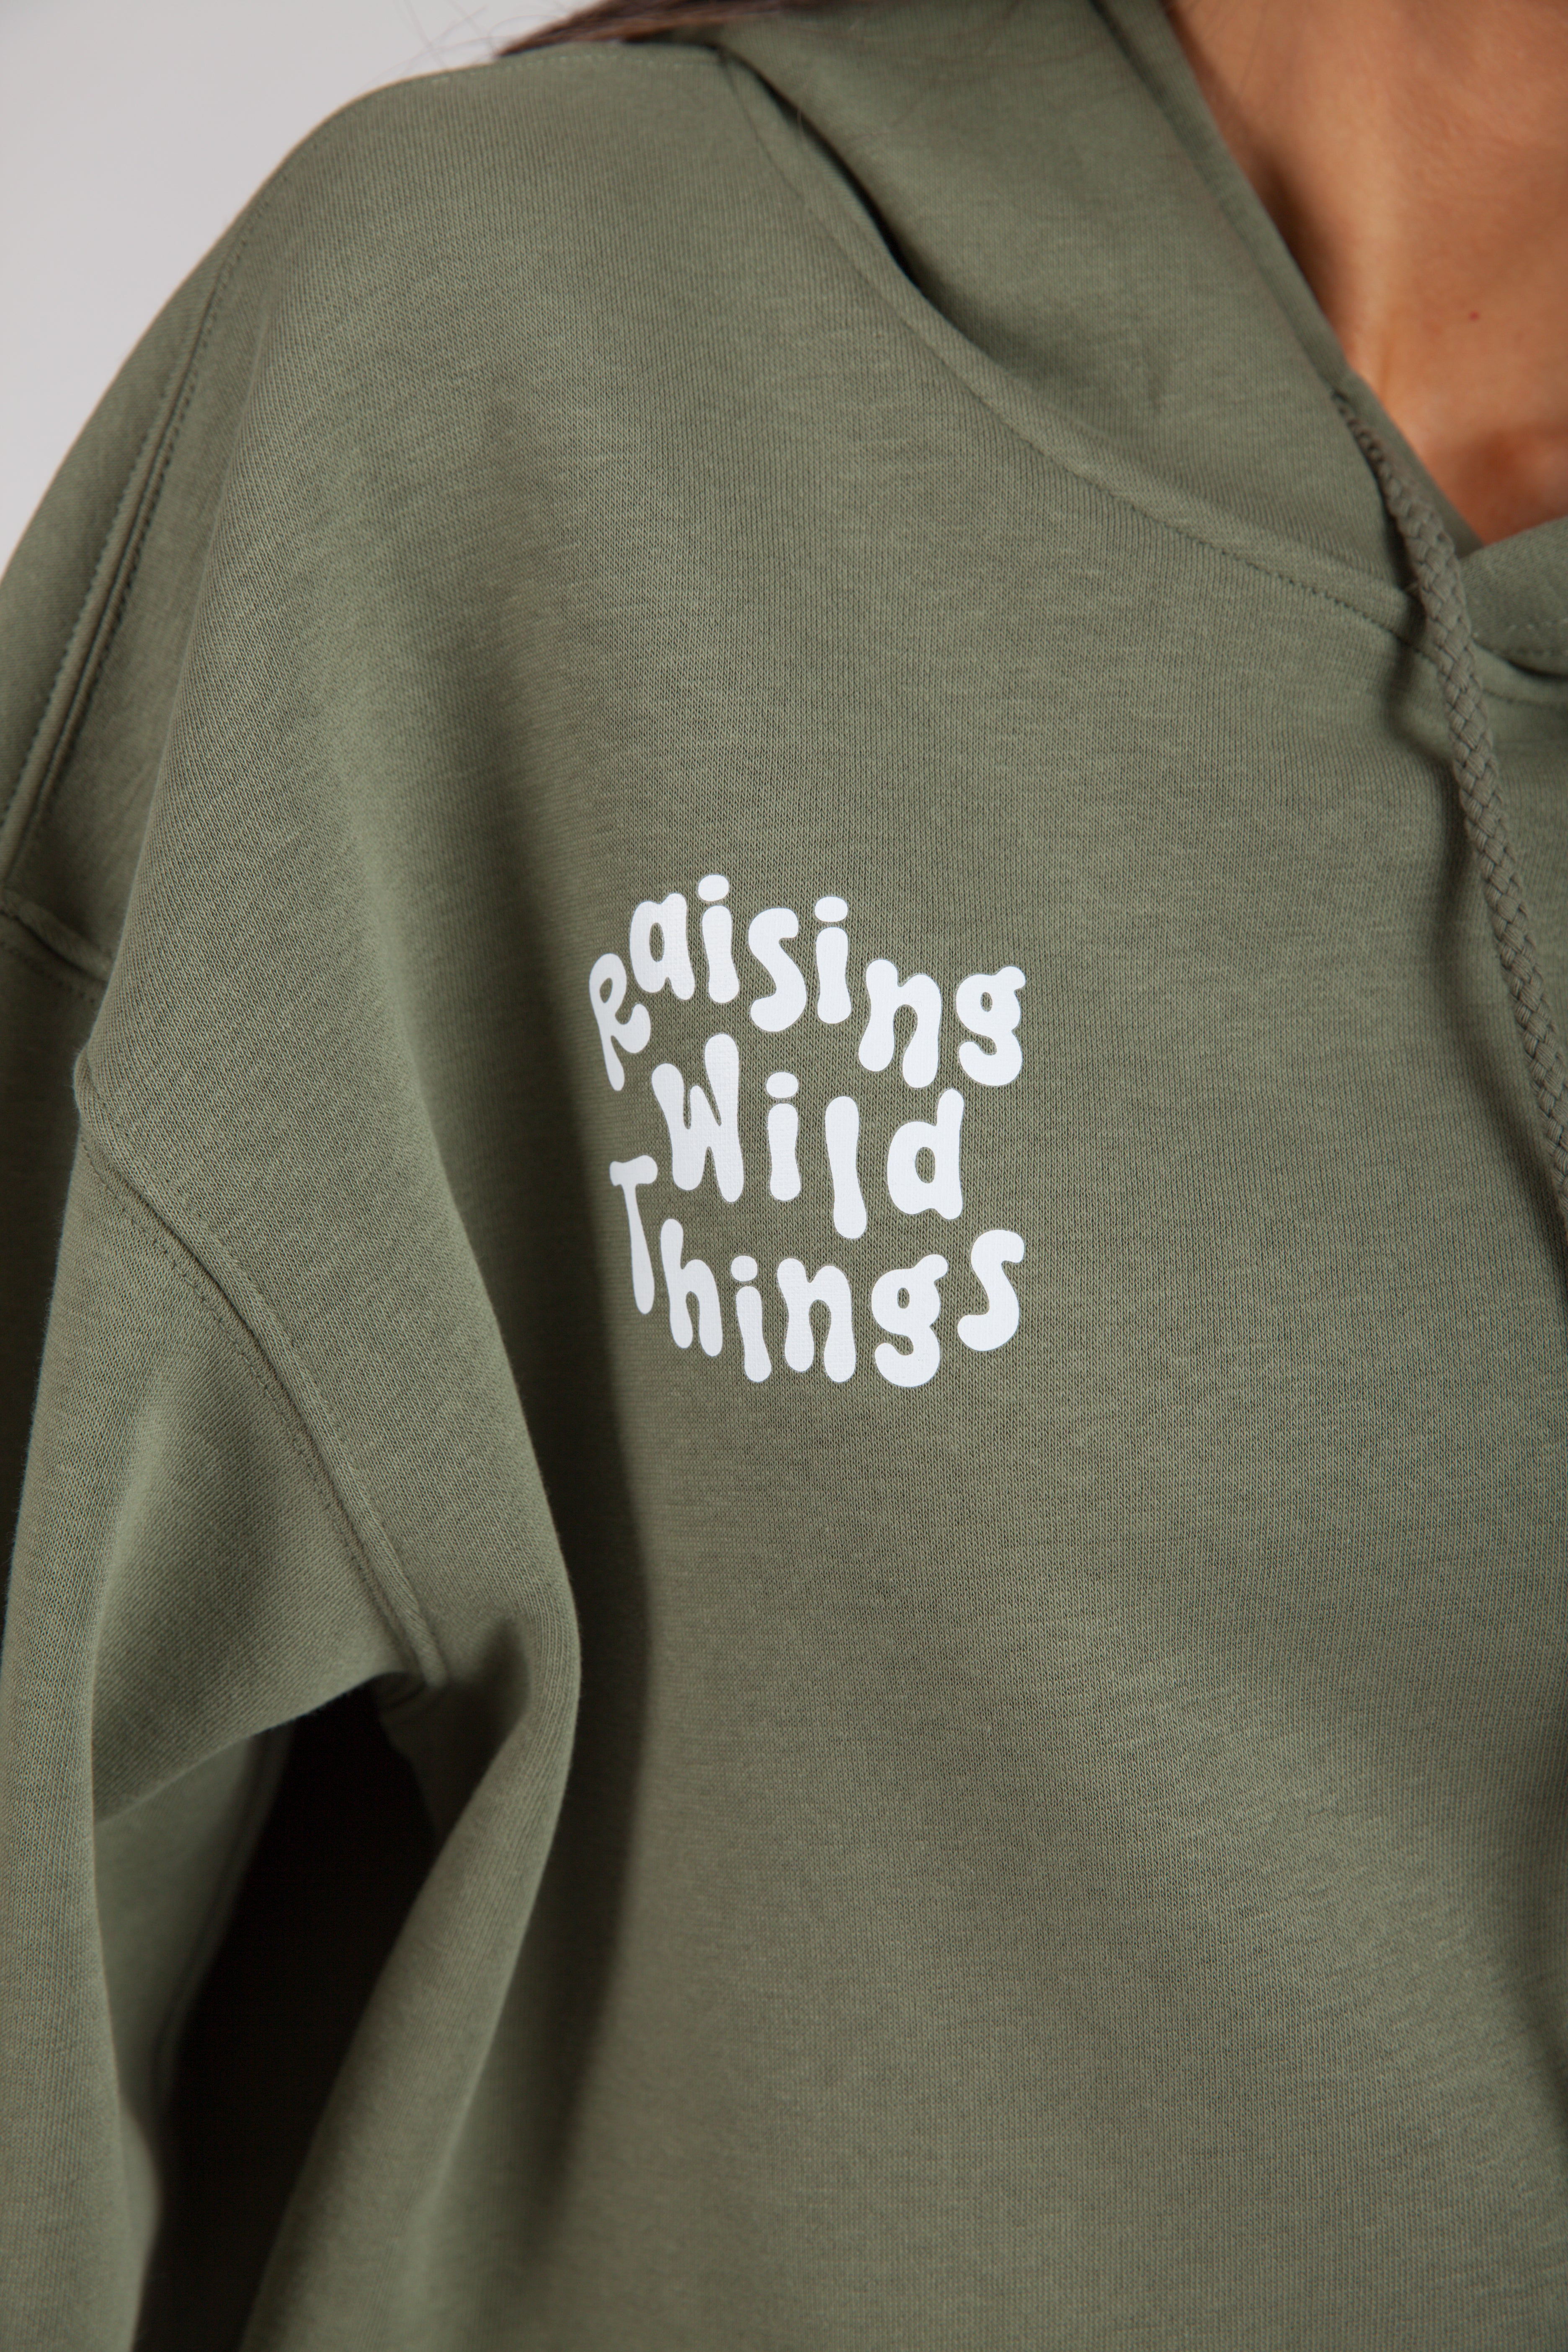 Raising wild things relaxed fleece hoodie in olive